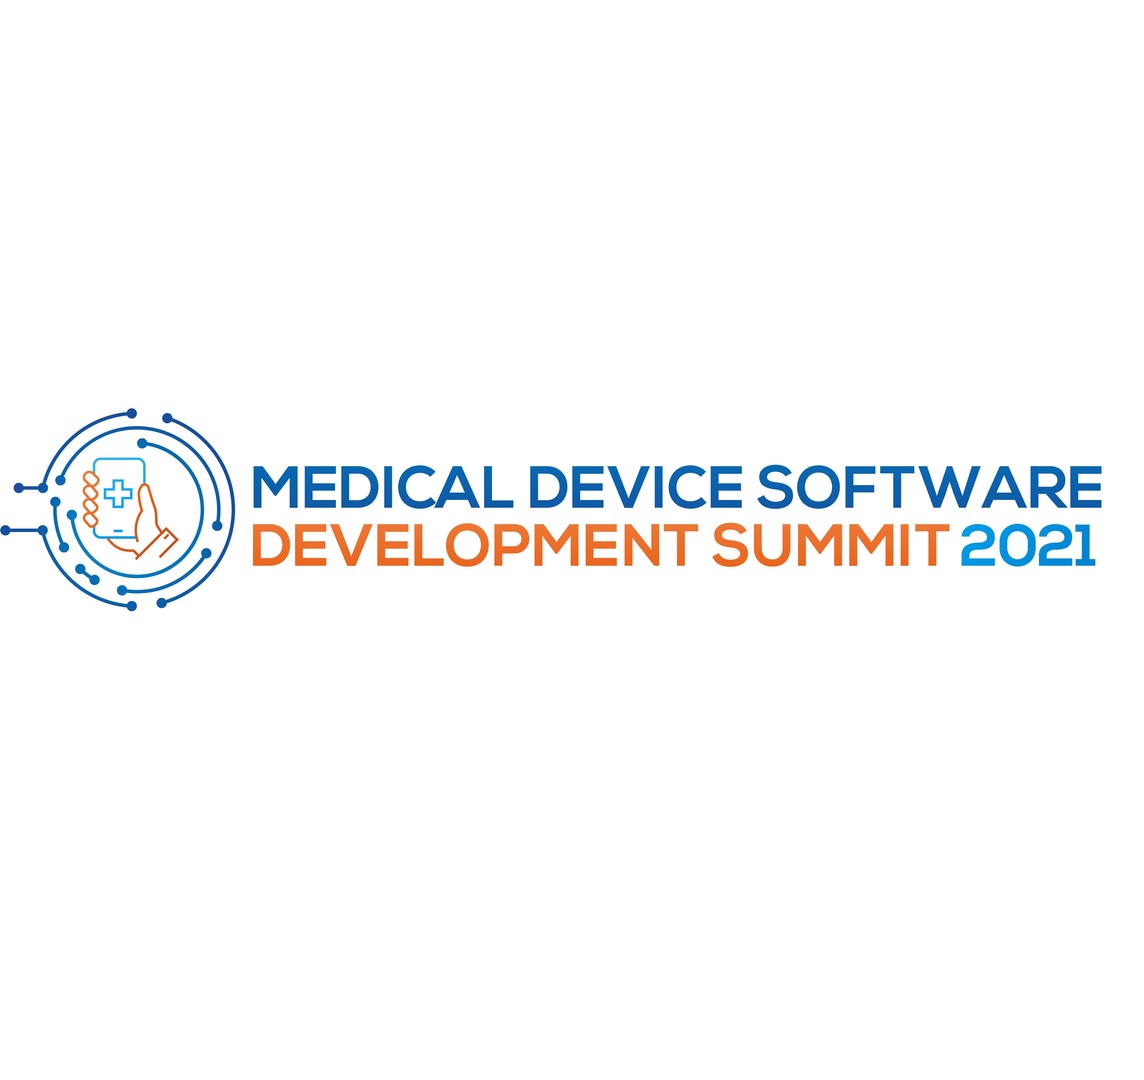 Medical Device Software Development Summit